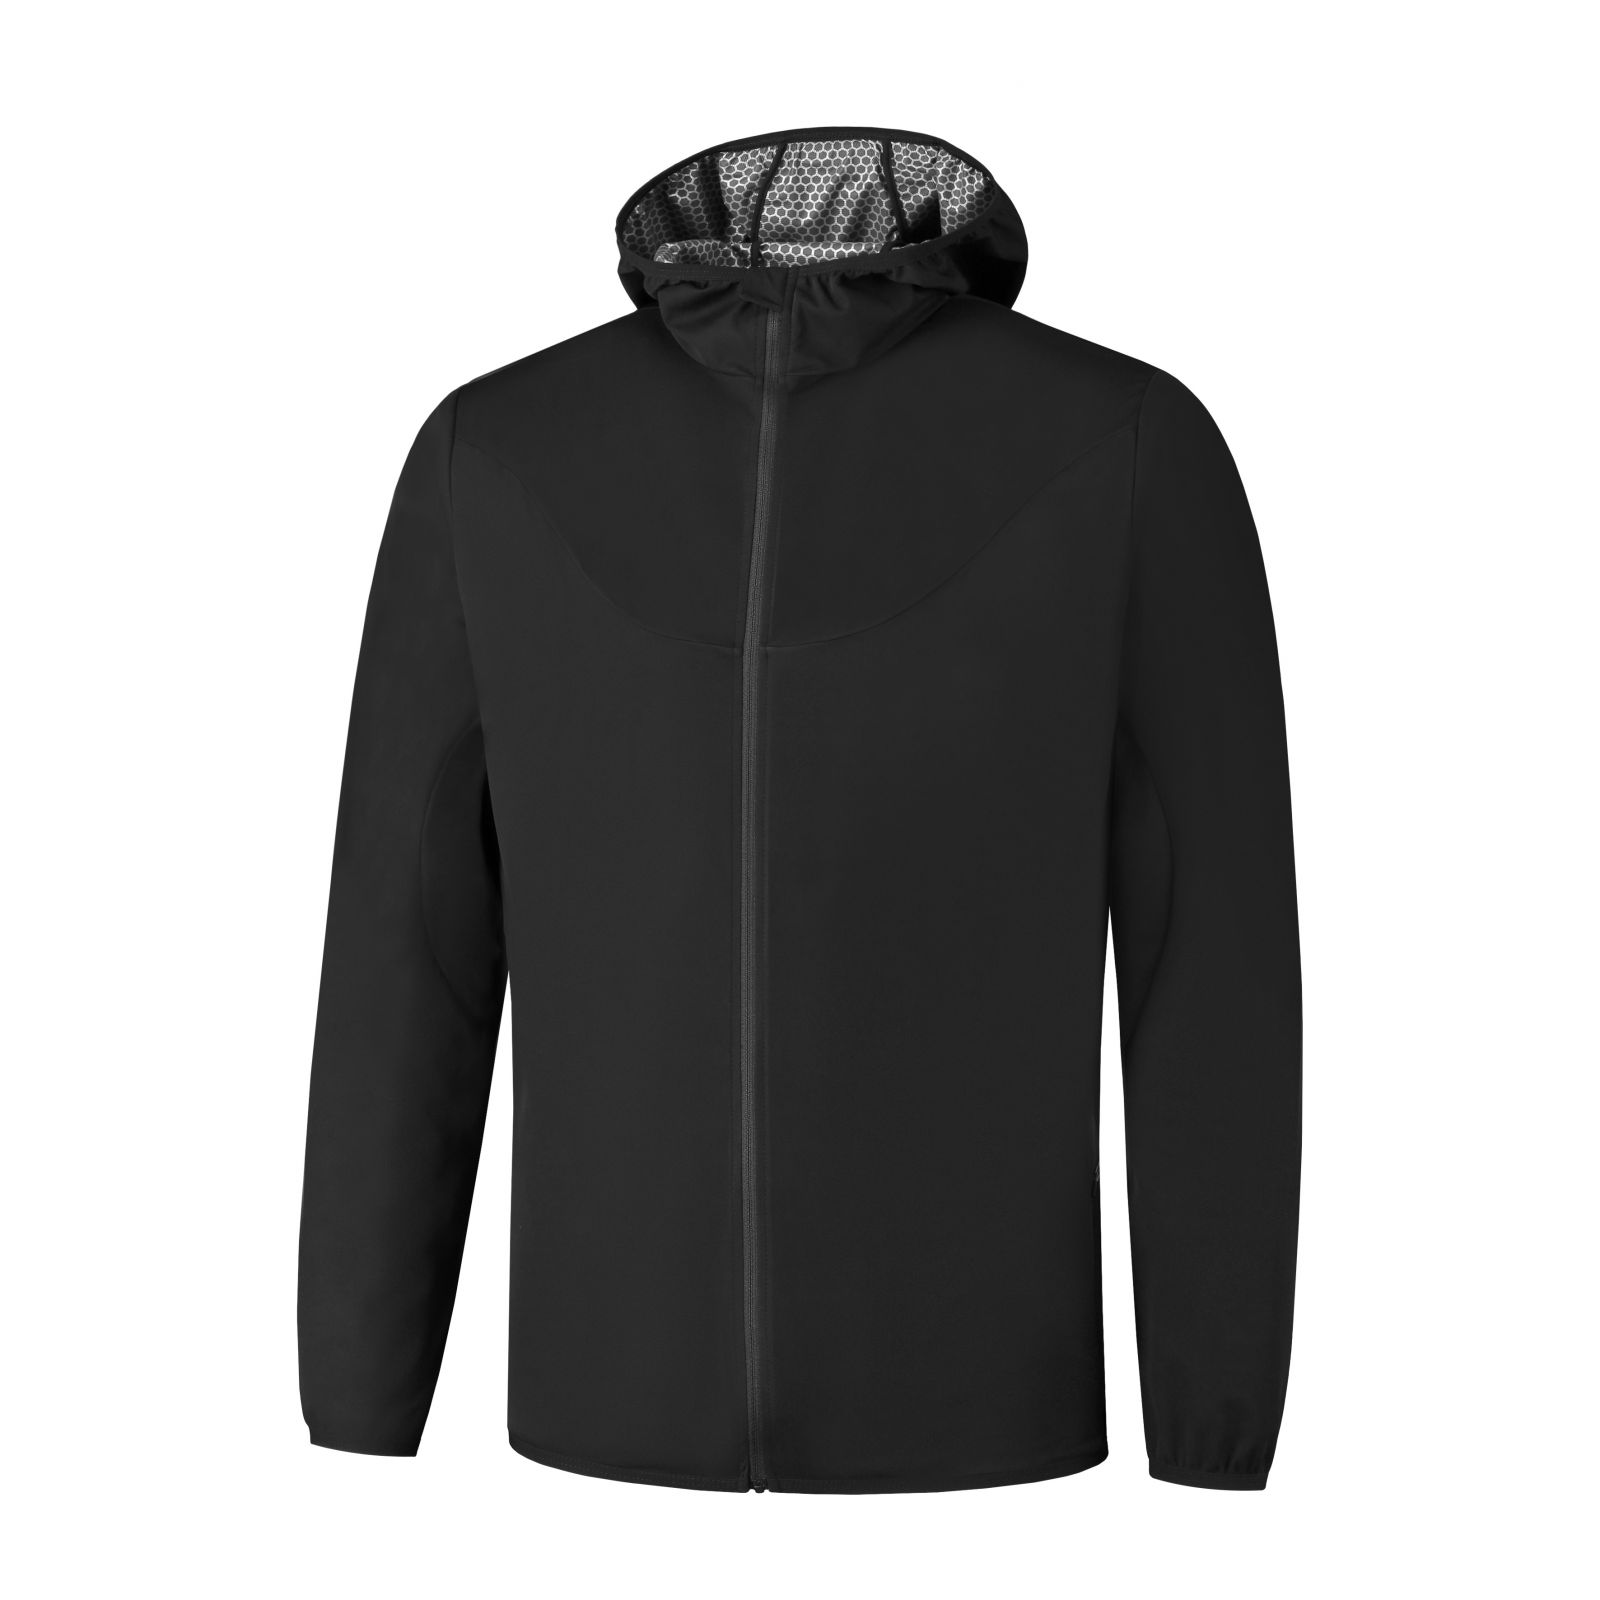 SHIMANO NAGANO MTB VARIABLE bunda, pánská, černá, XL